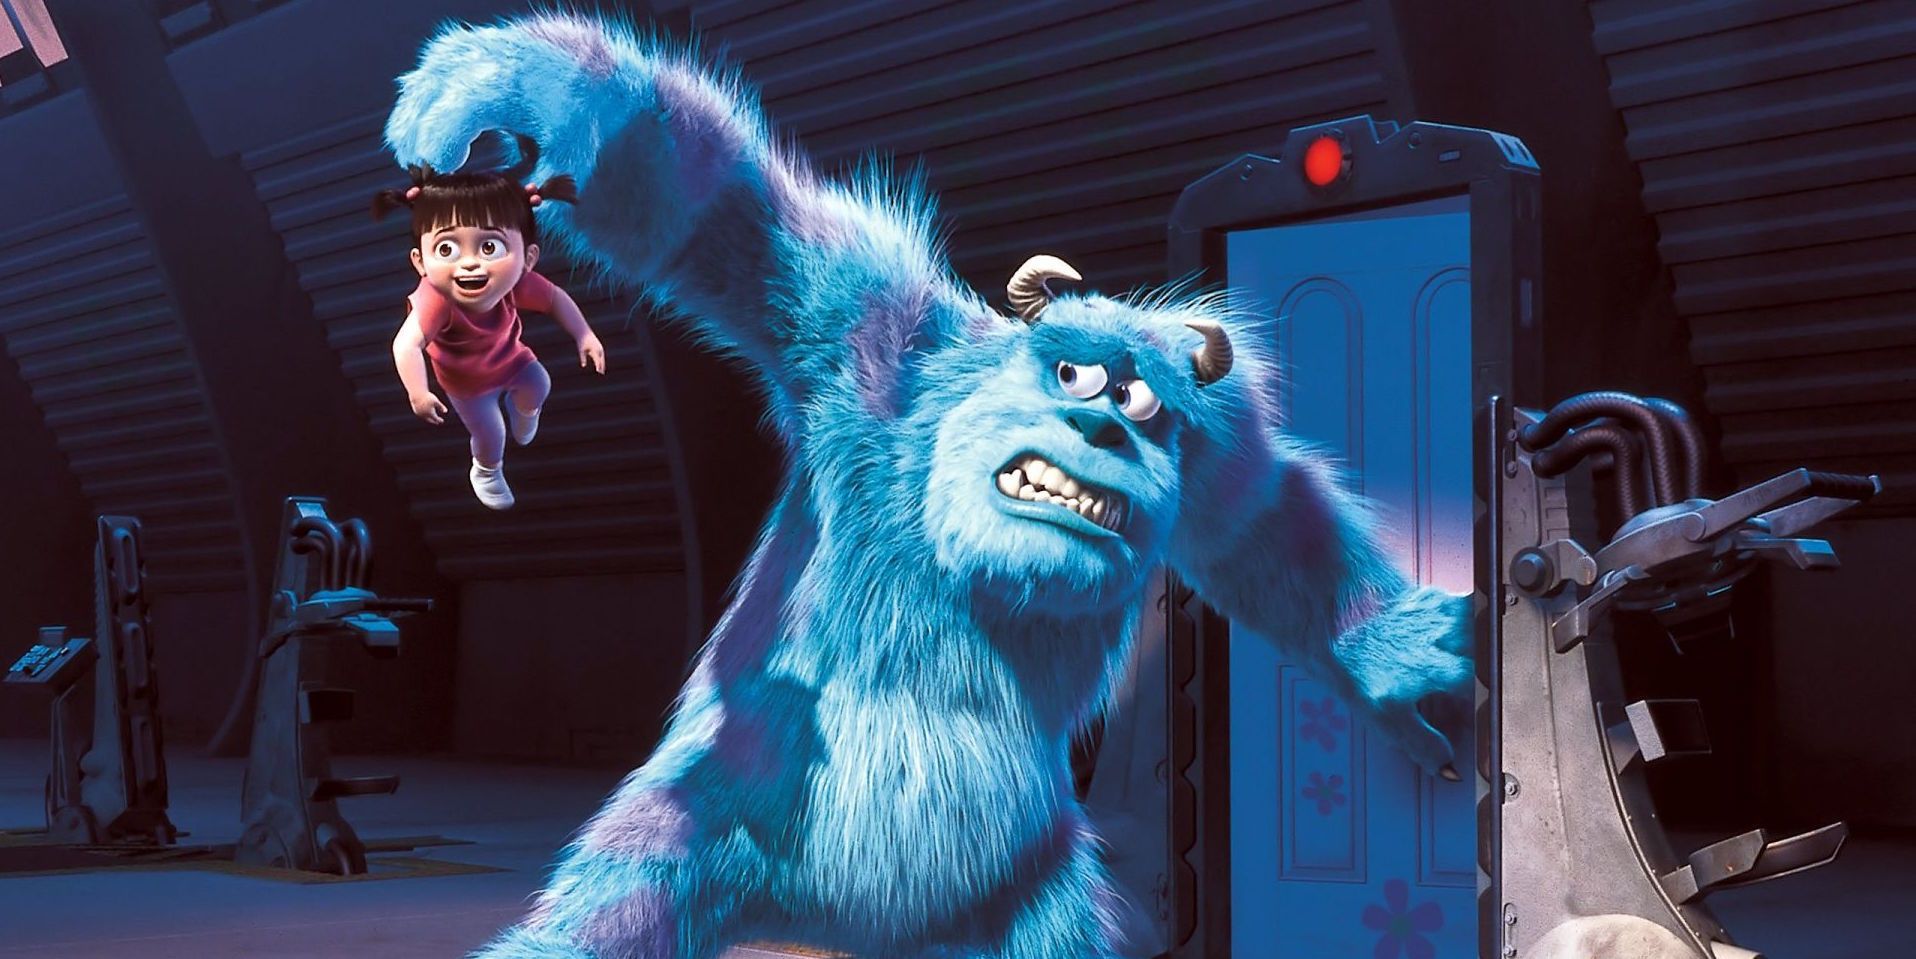 The D&D Moral Alignments In Disney/Pixar Movies